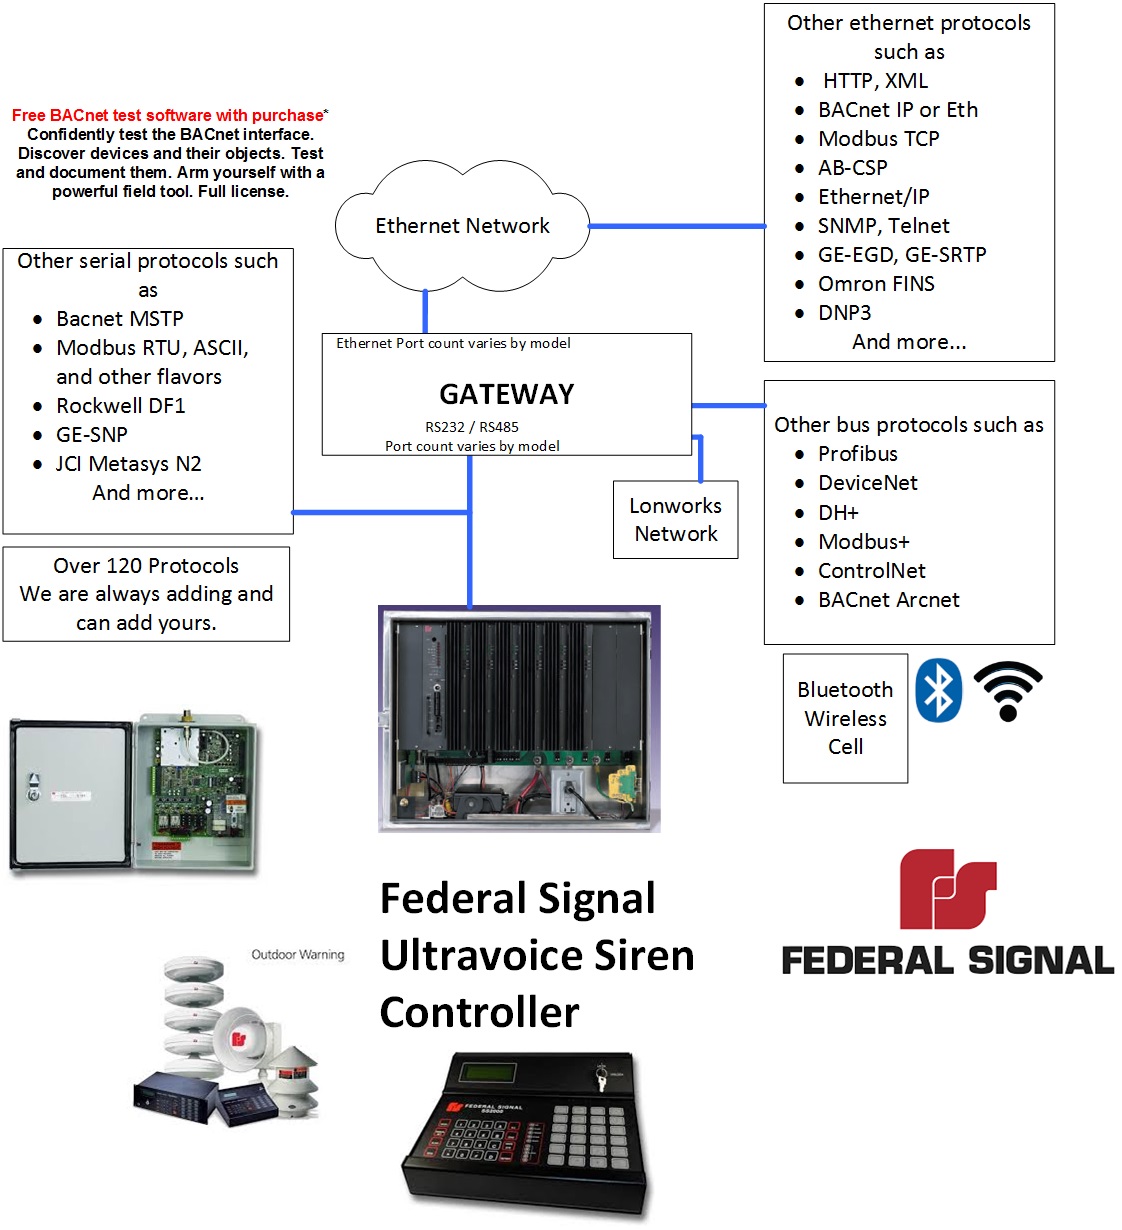 imports/blockDiagrams/LP Federal Signal.jpg